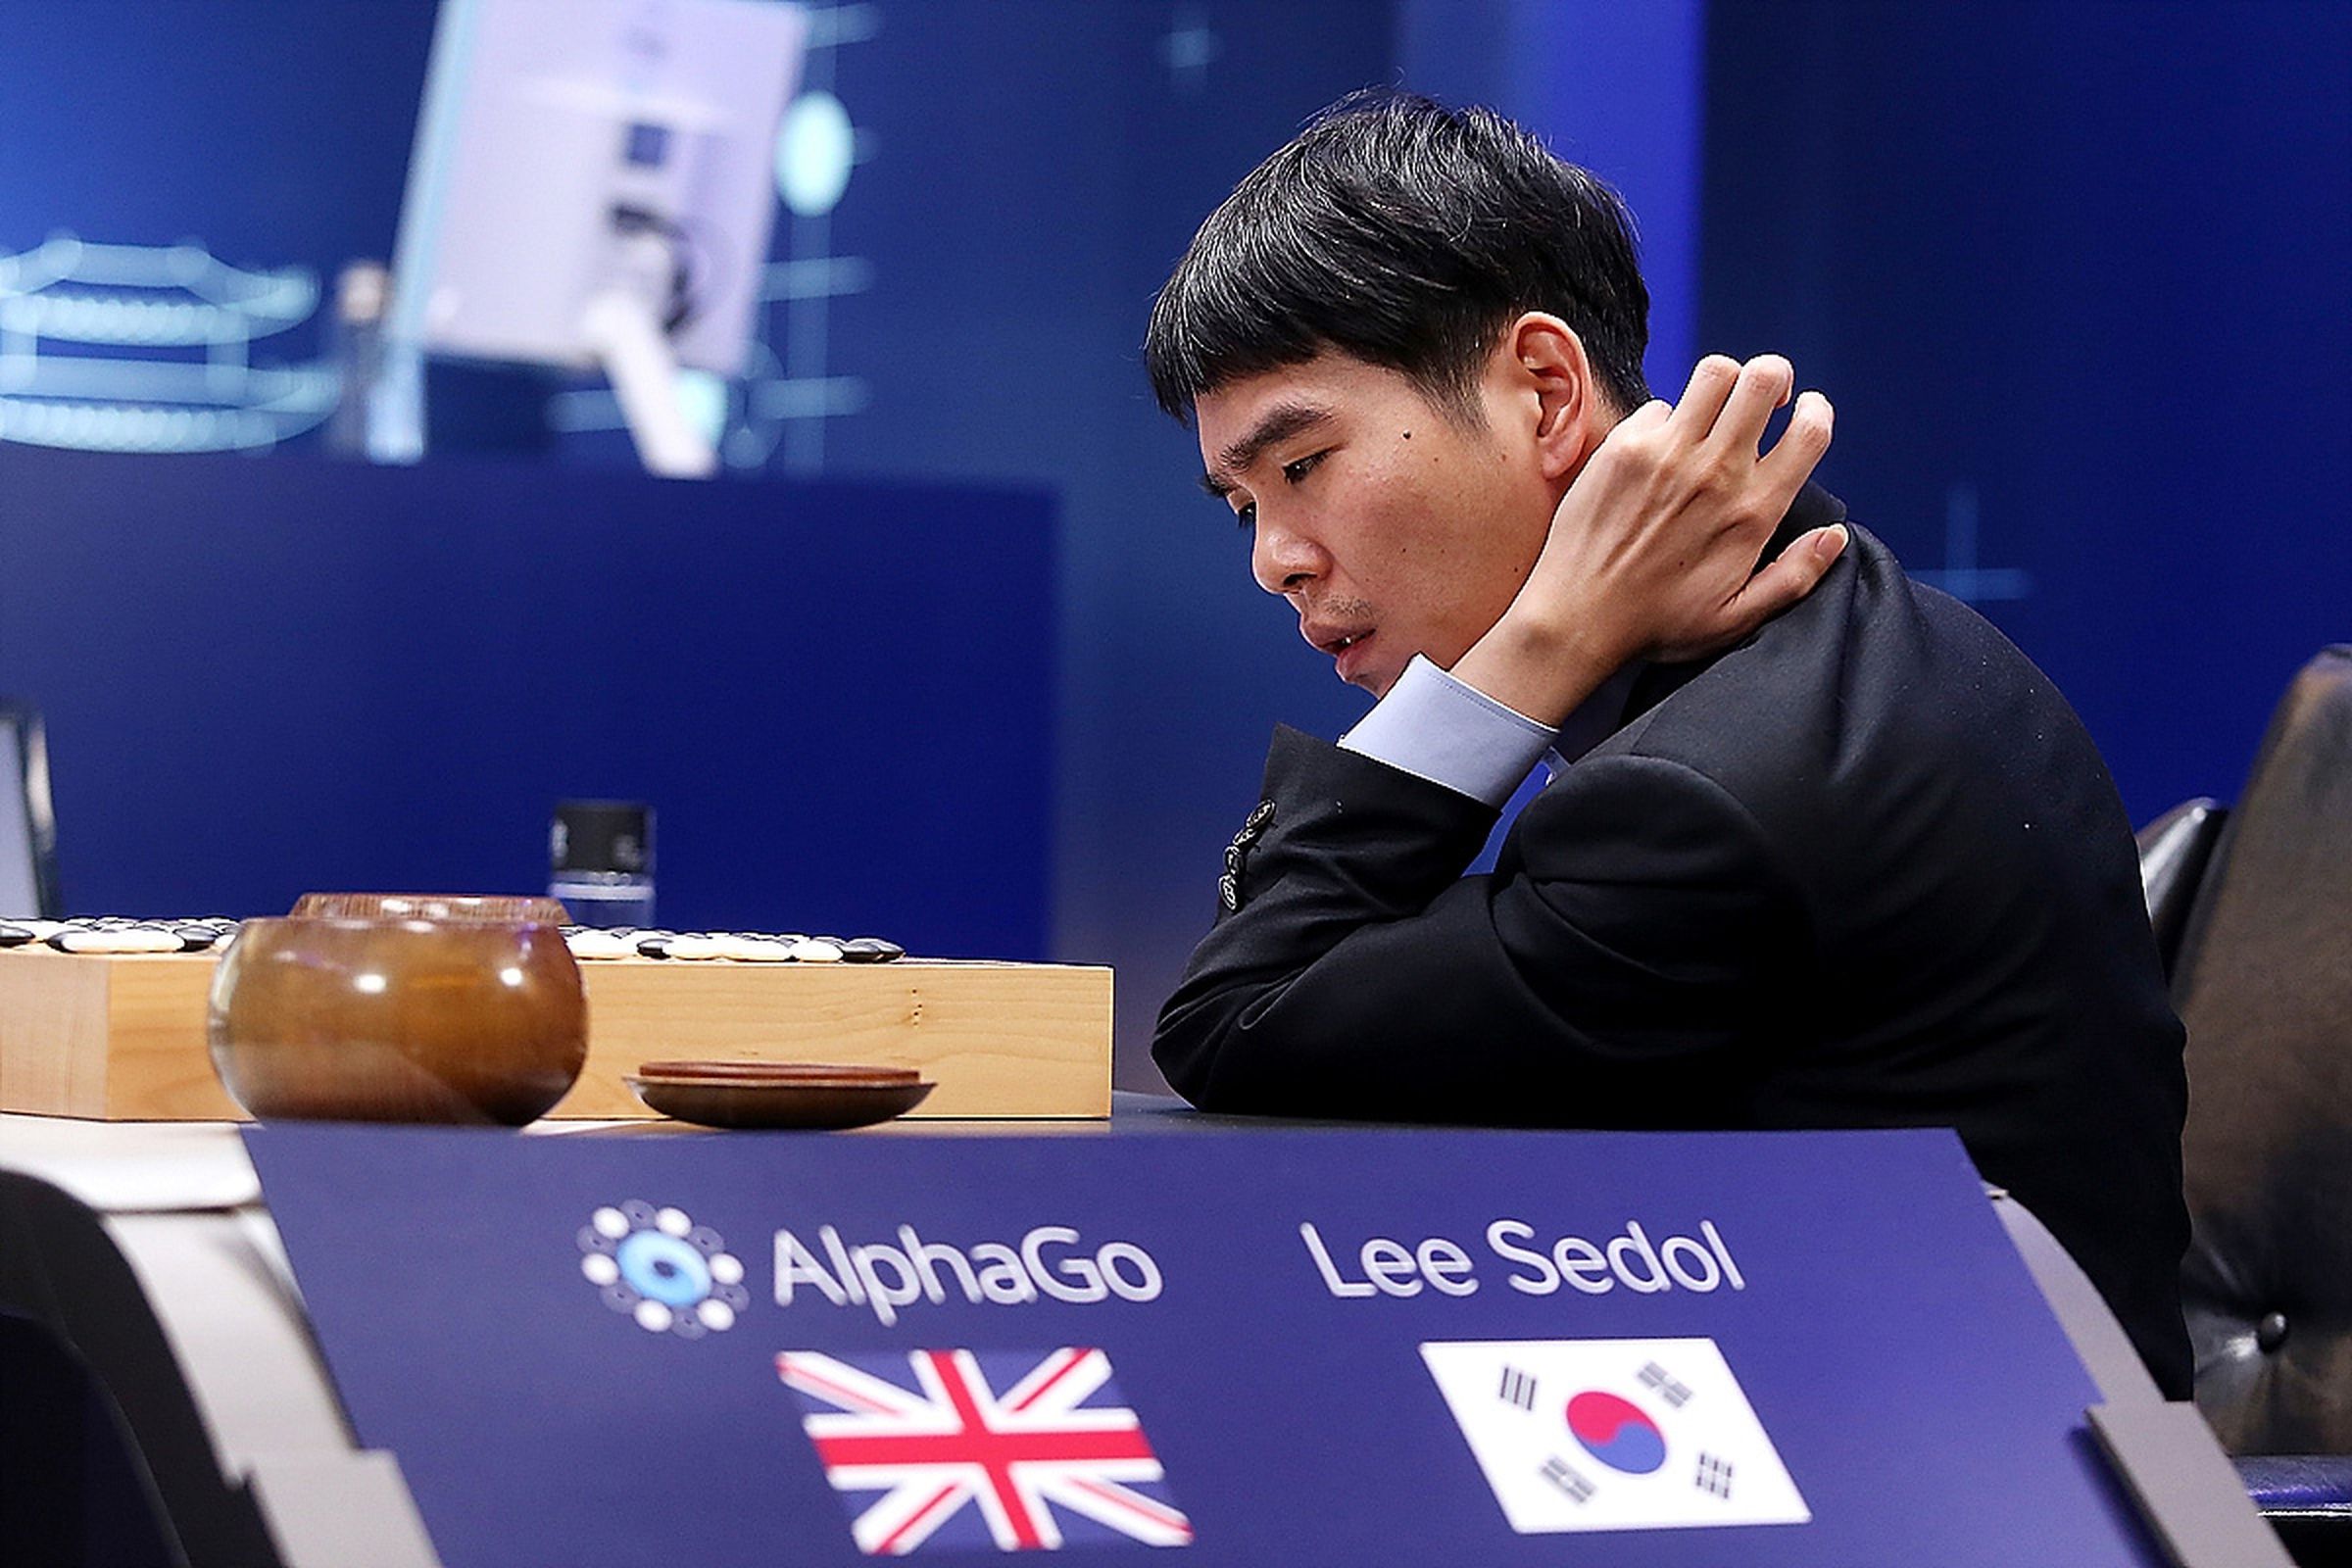 Professional ‘Go’ Player Lee Se-dol Set To Play Google’s AlphaGo